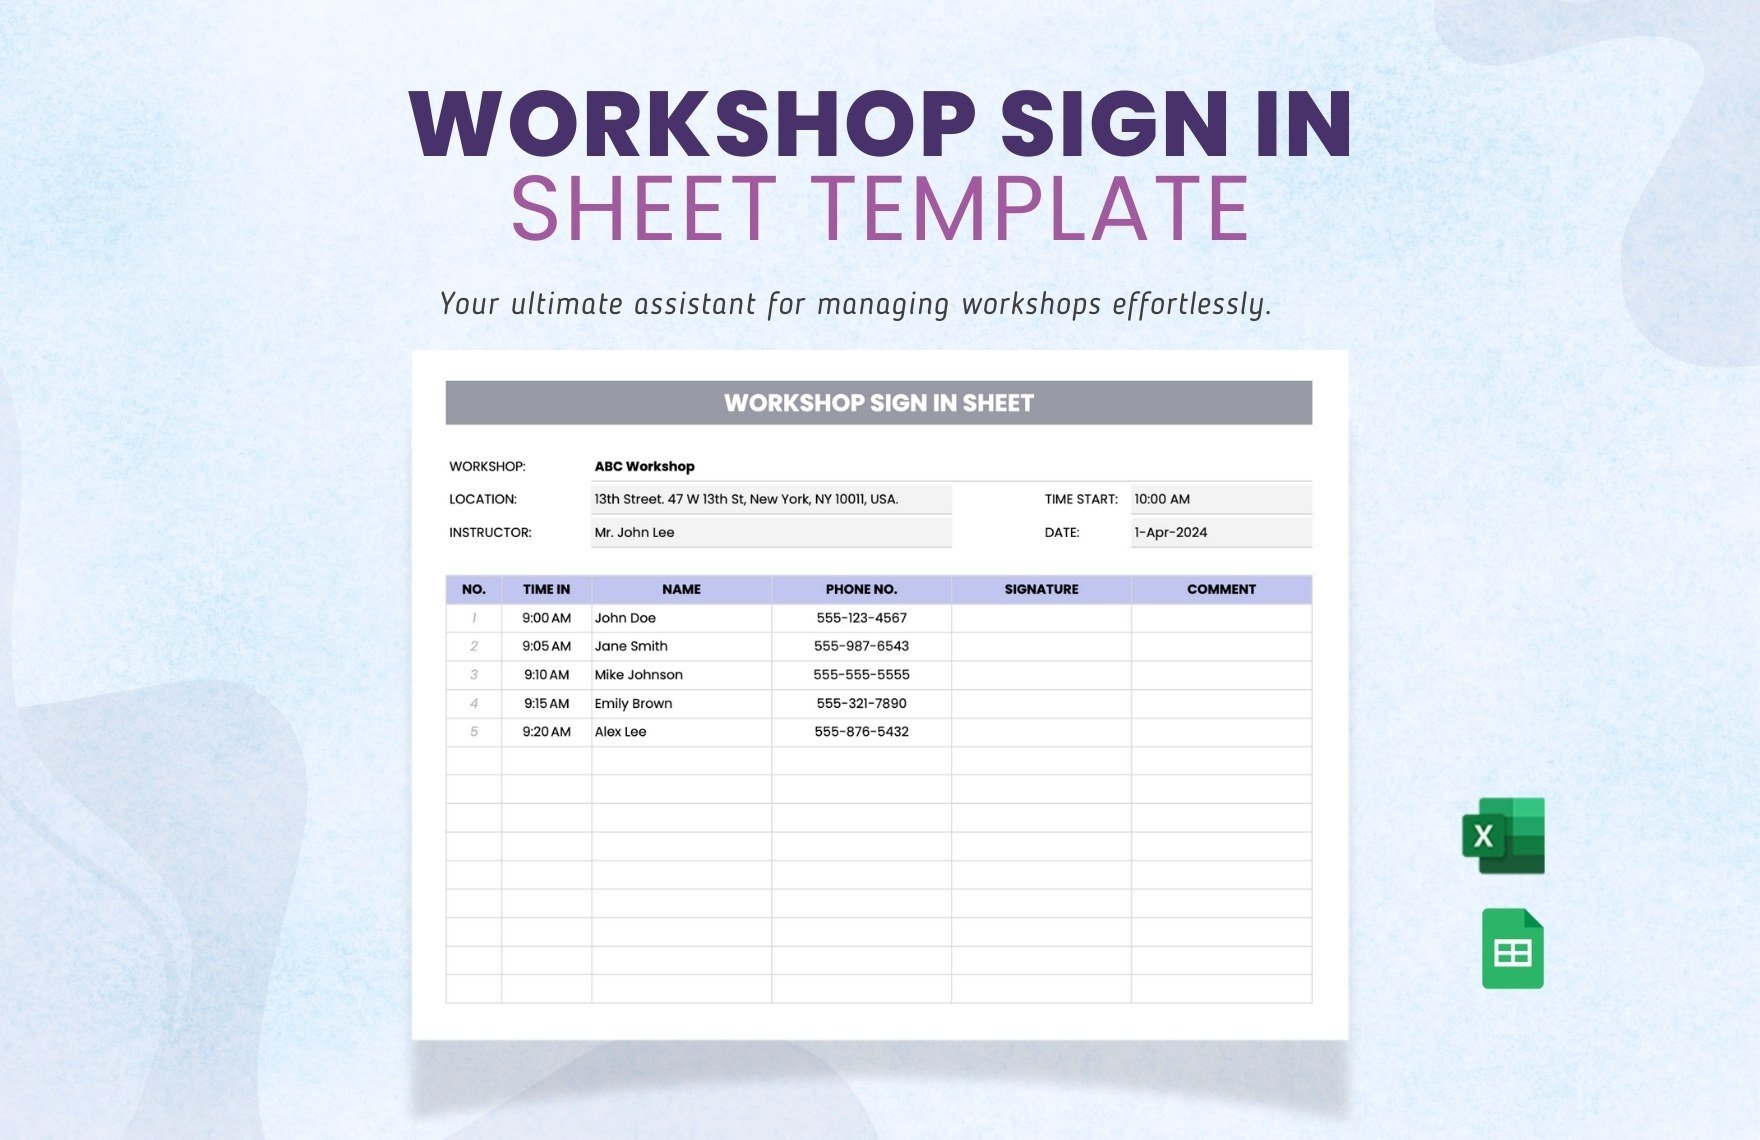 Workshop Sign in Sheet Template in Excel, Google Sheets